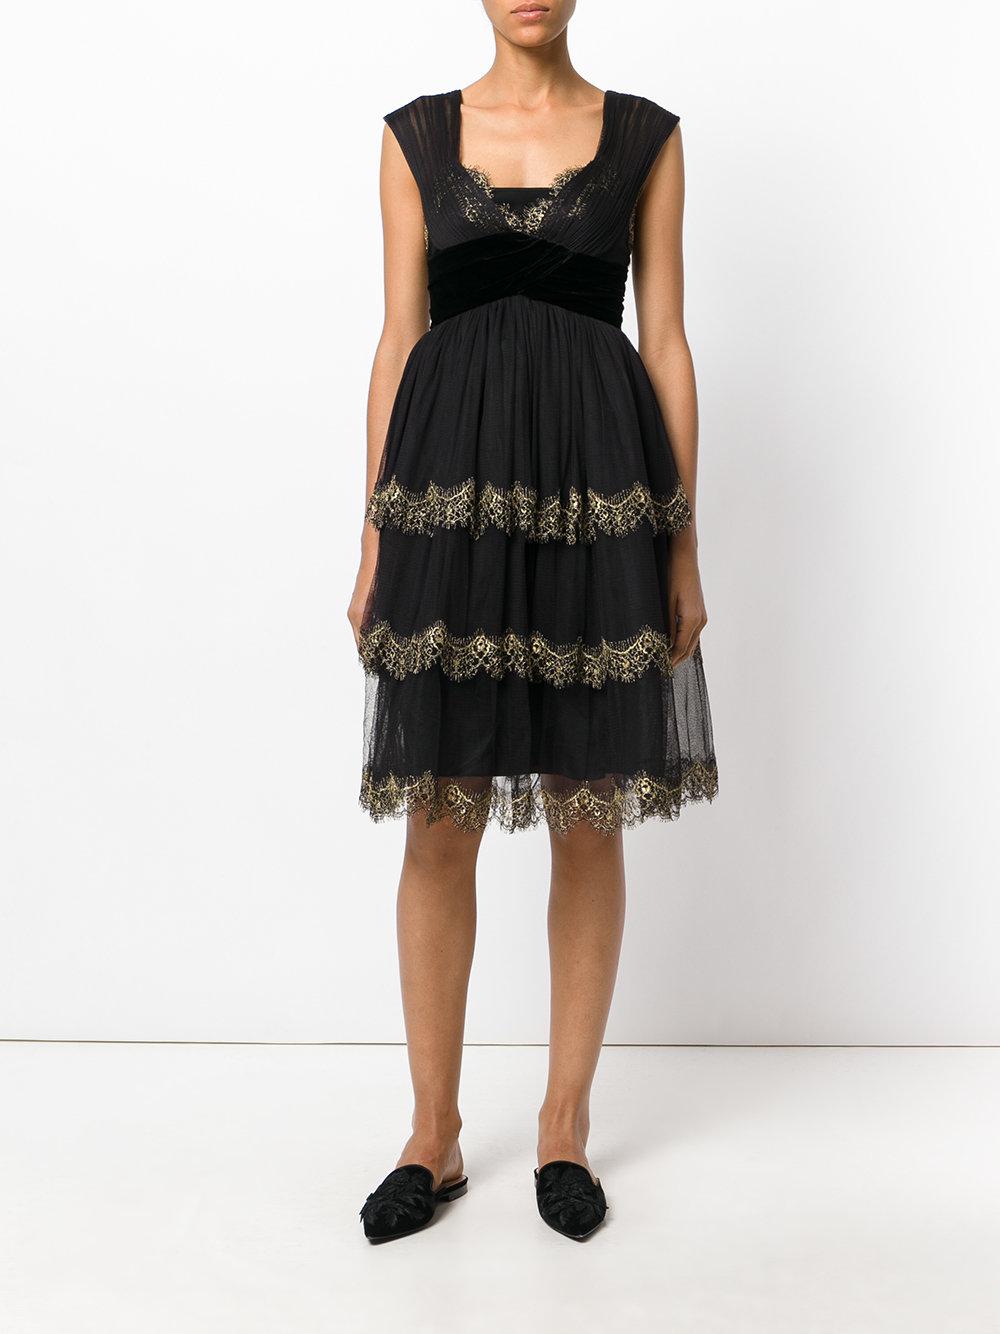 Alberta Ferretti Crystal Accent Lace Dress in Black - Lyst